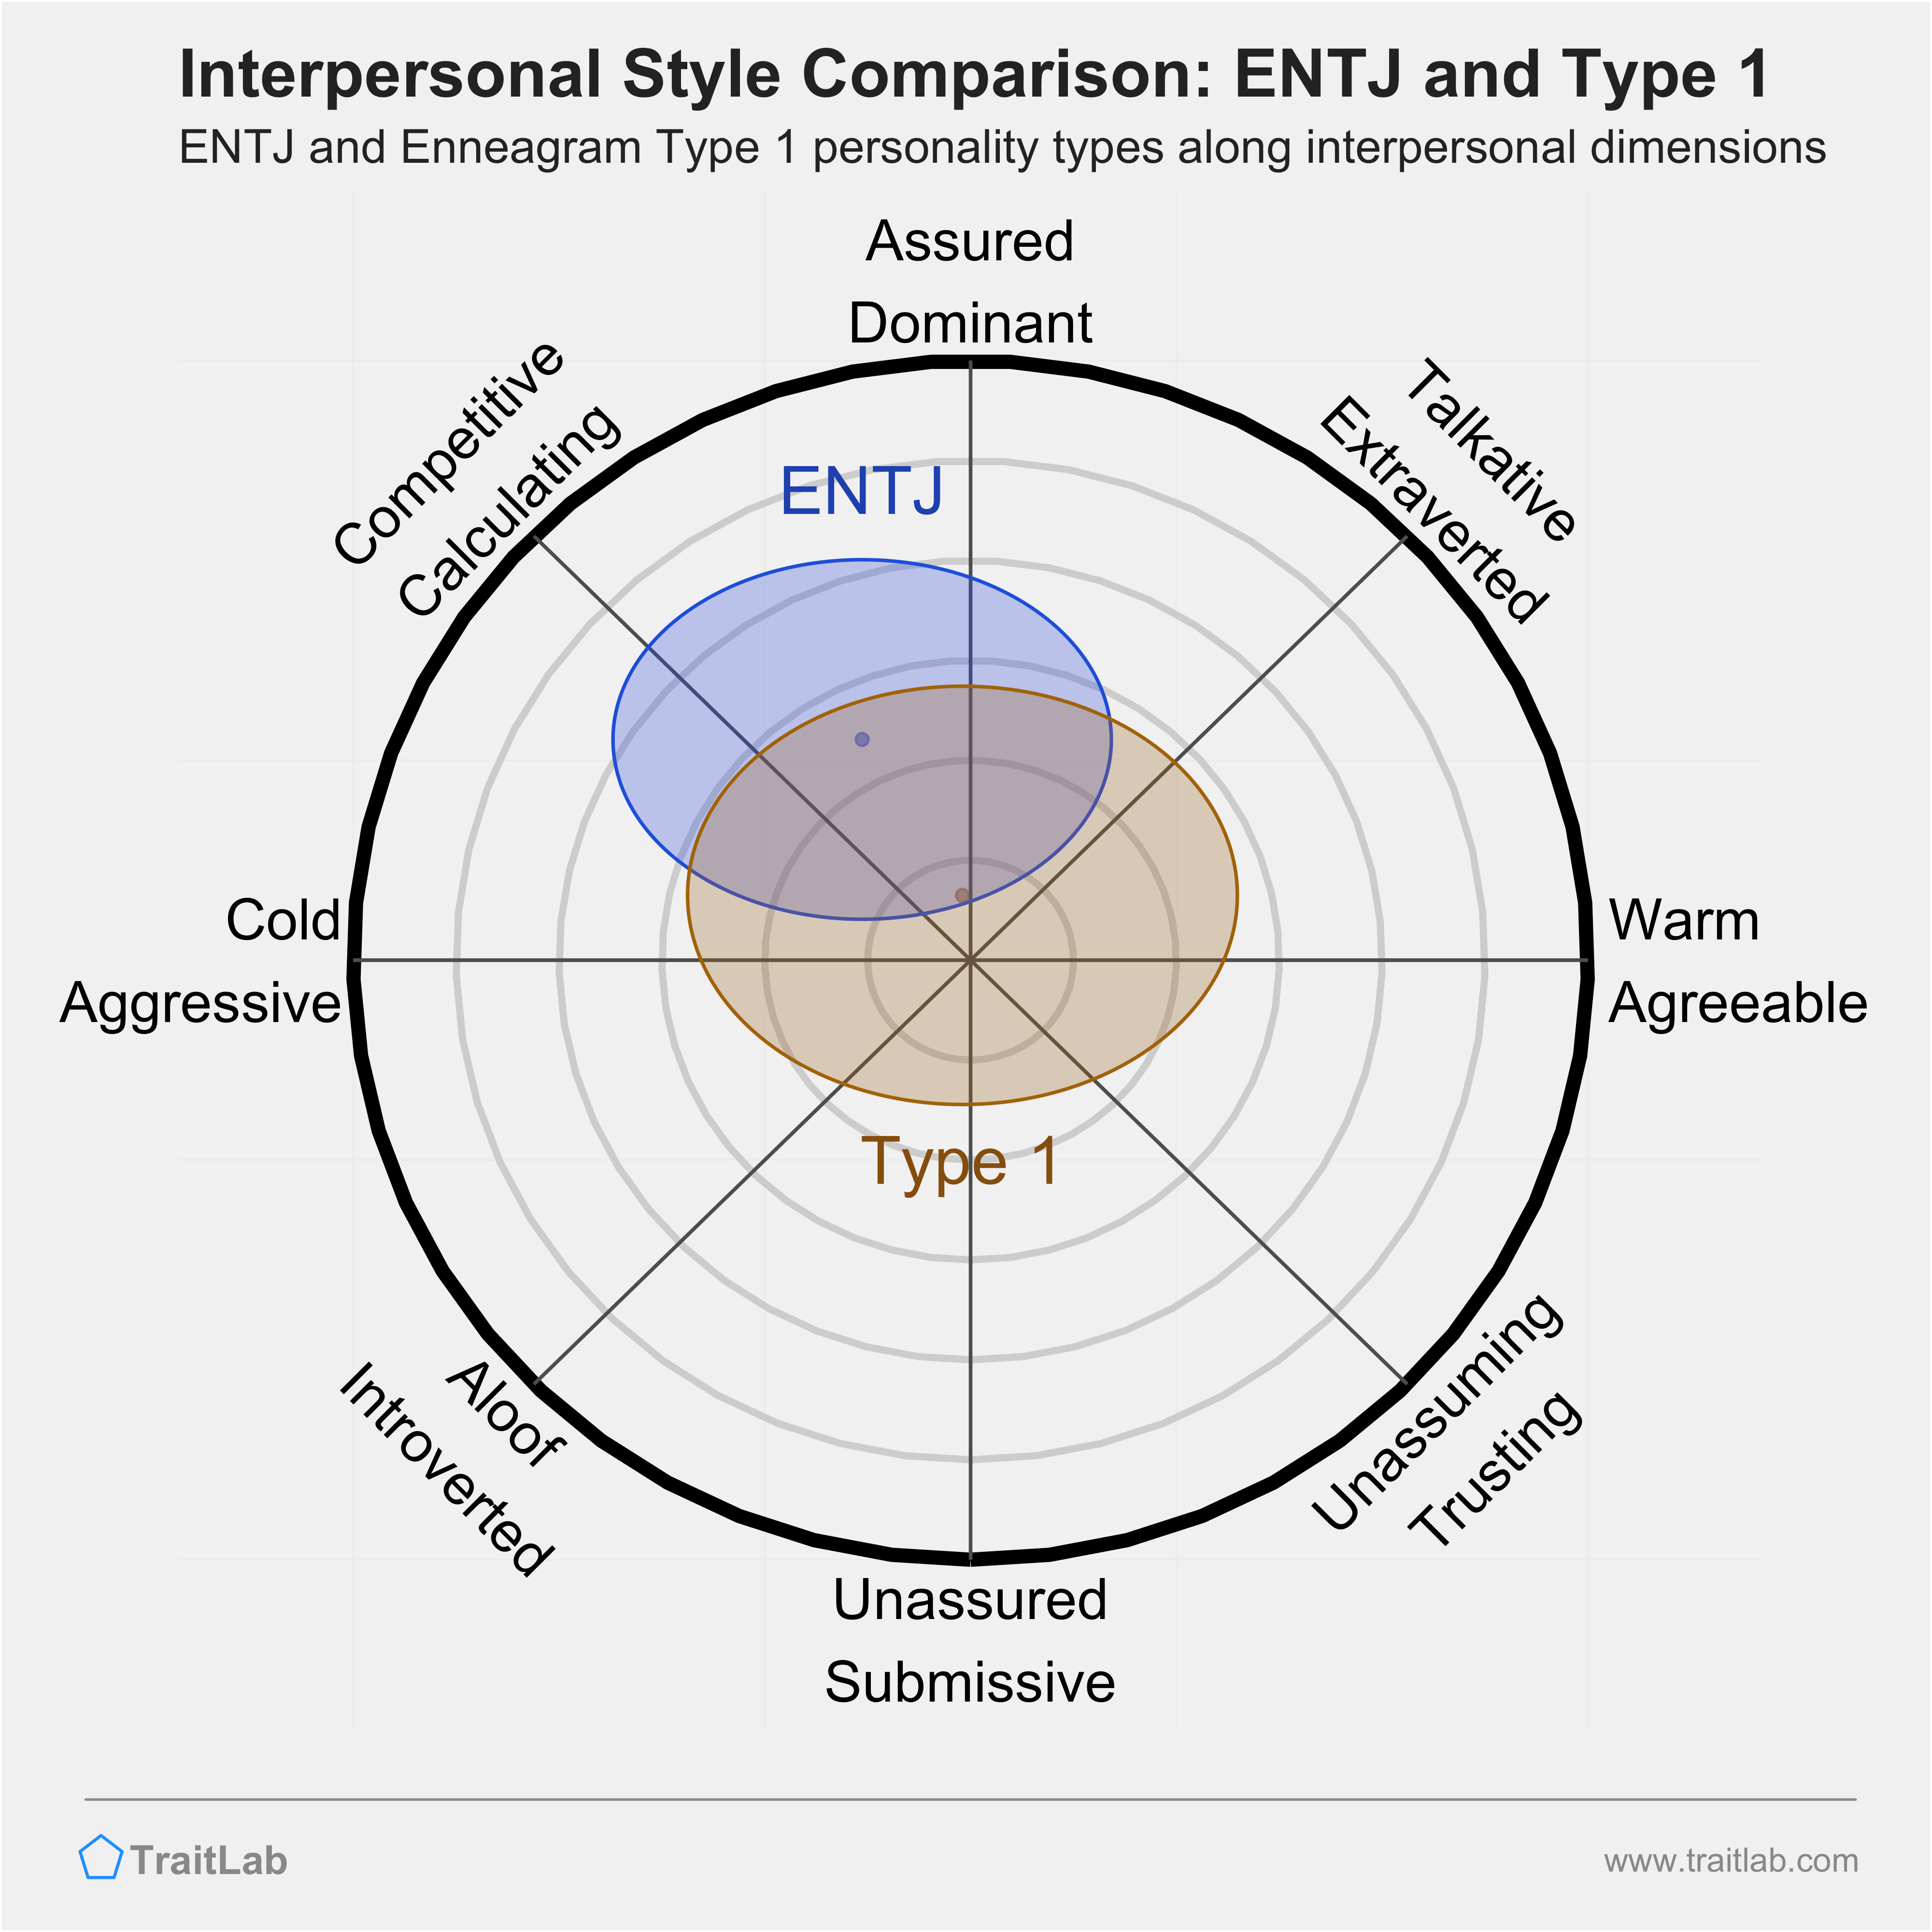 Enneagram ENTJ and Type 1 comparison across interpersonal dimensions